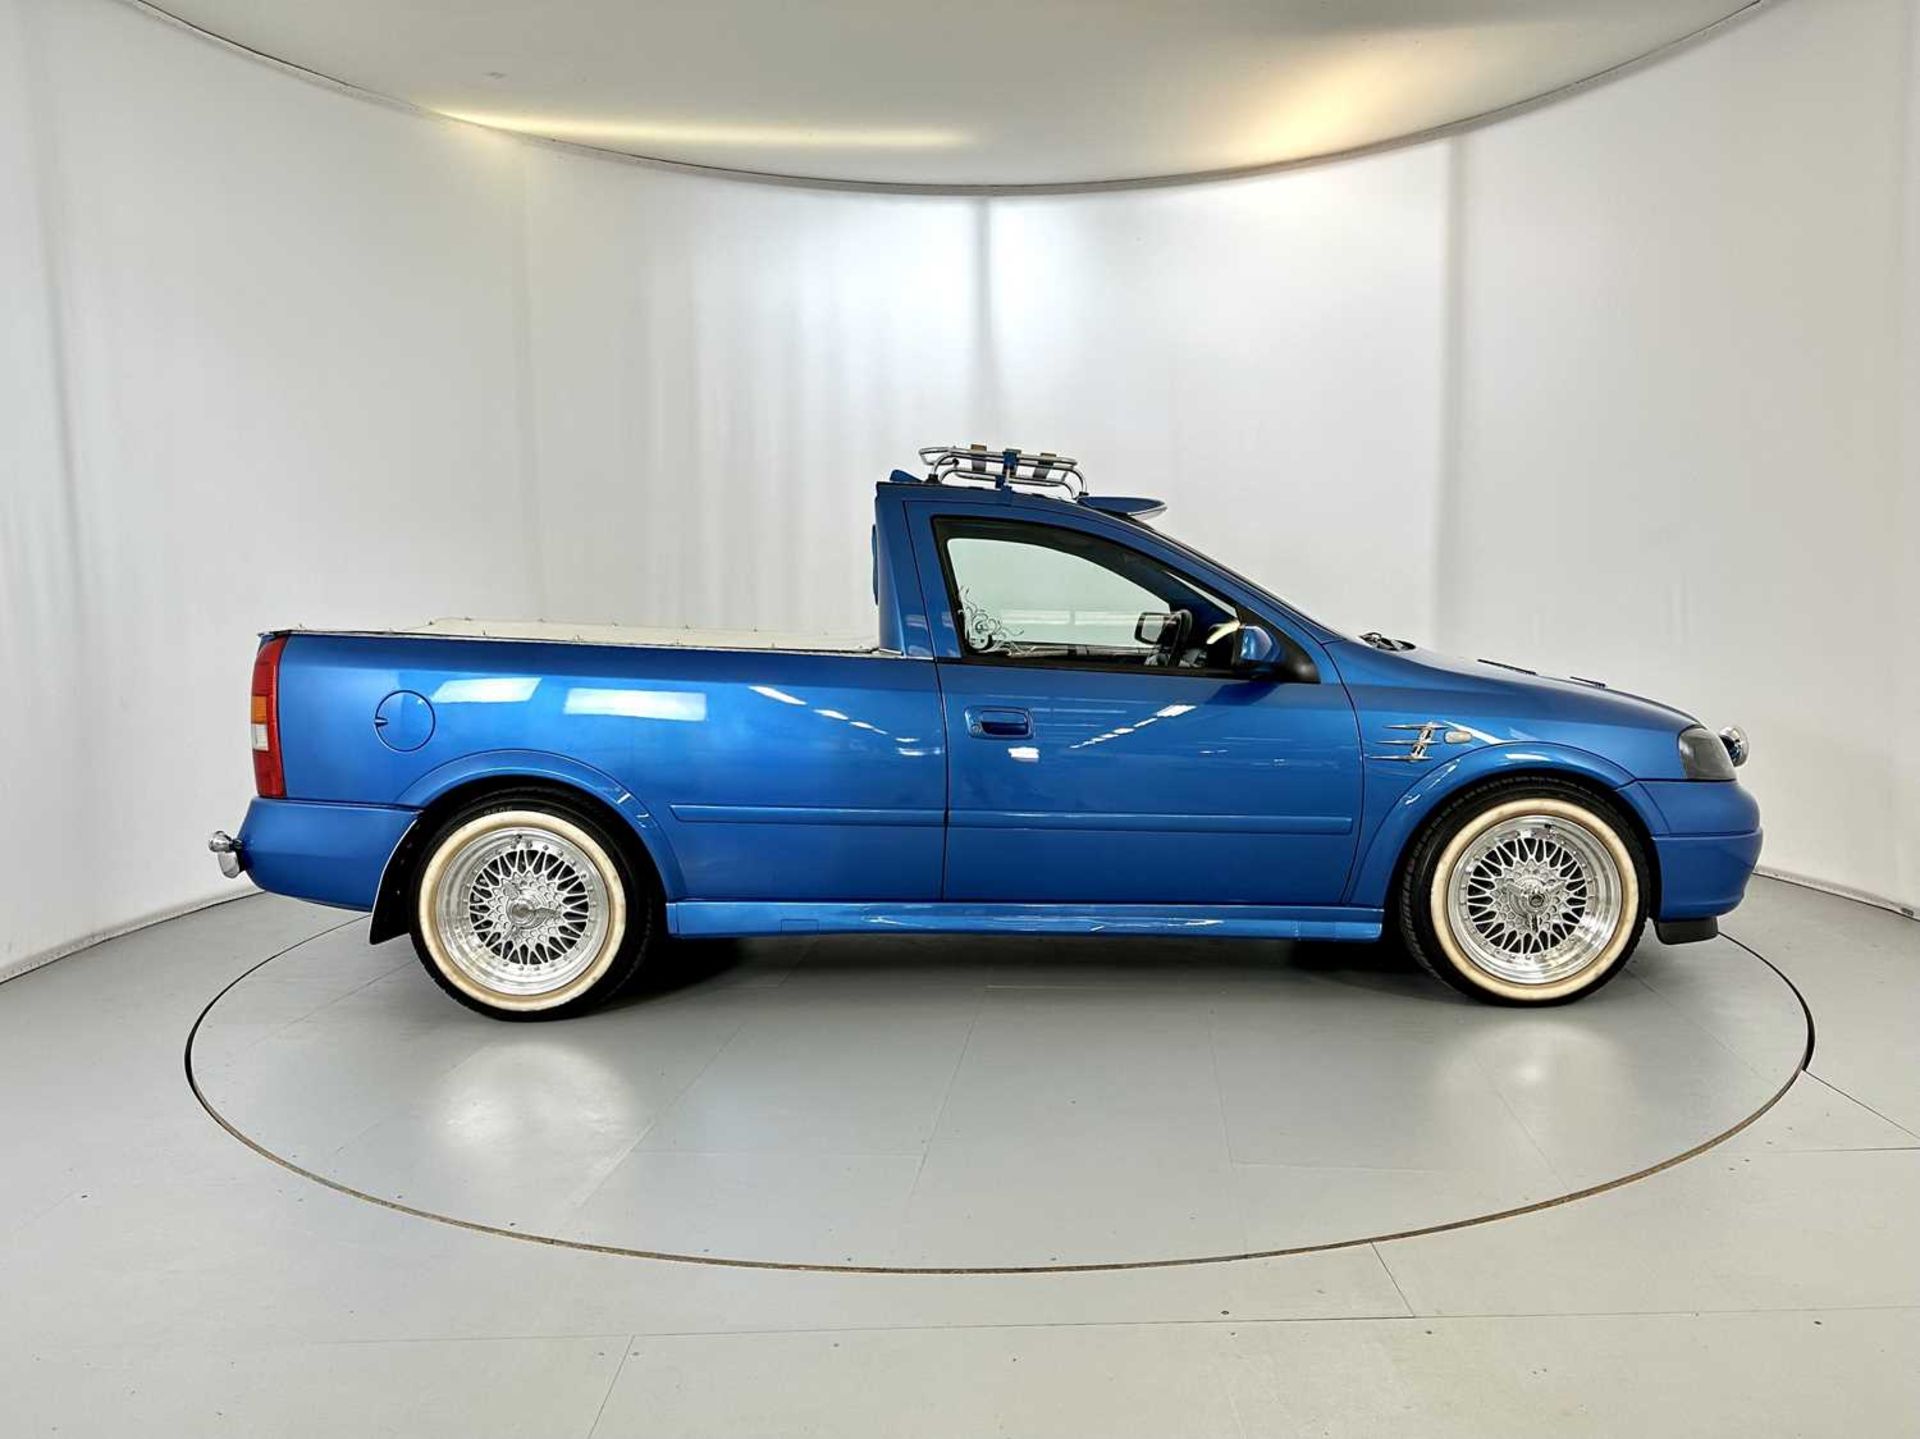 2000 Vauxhall Astra Pickup - Image 11 of 30